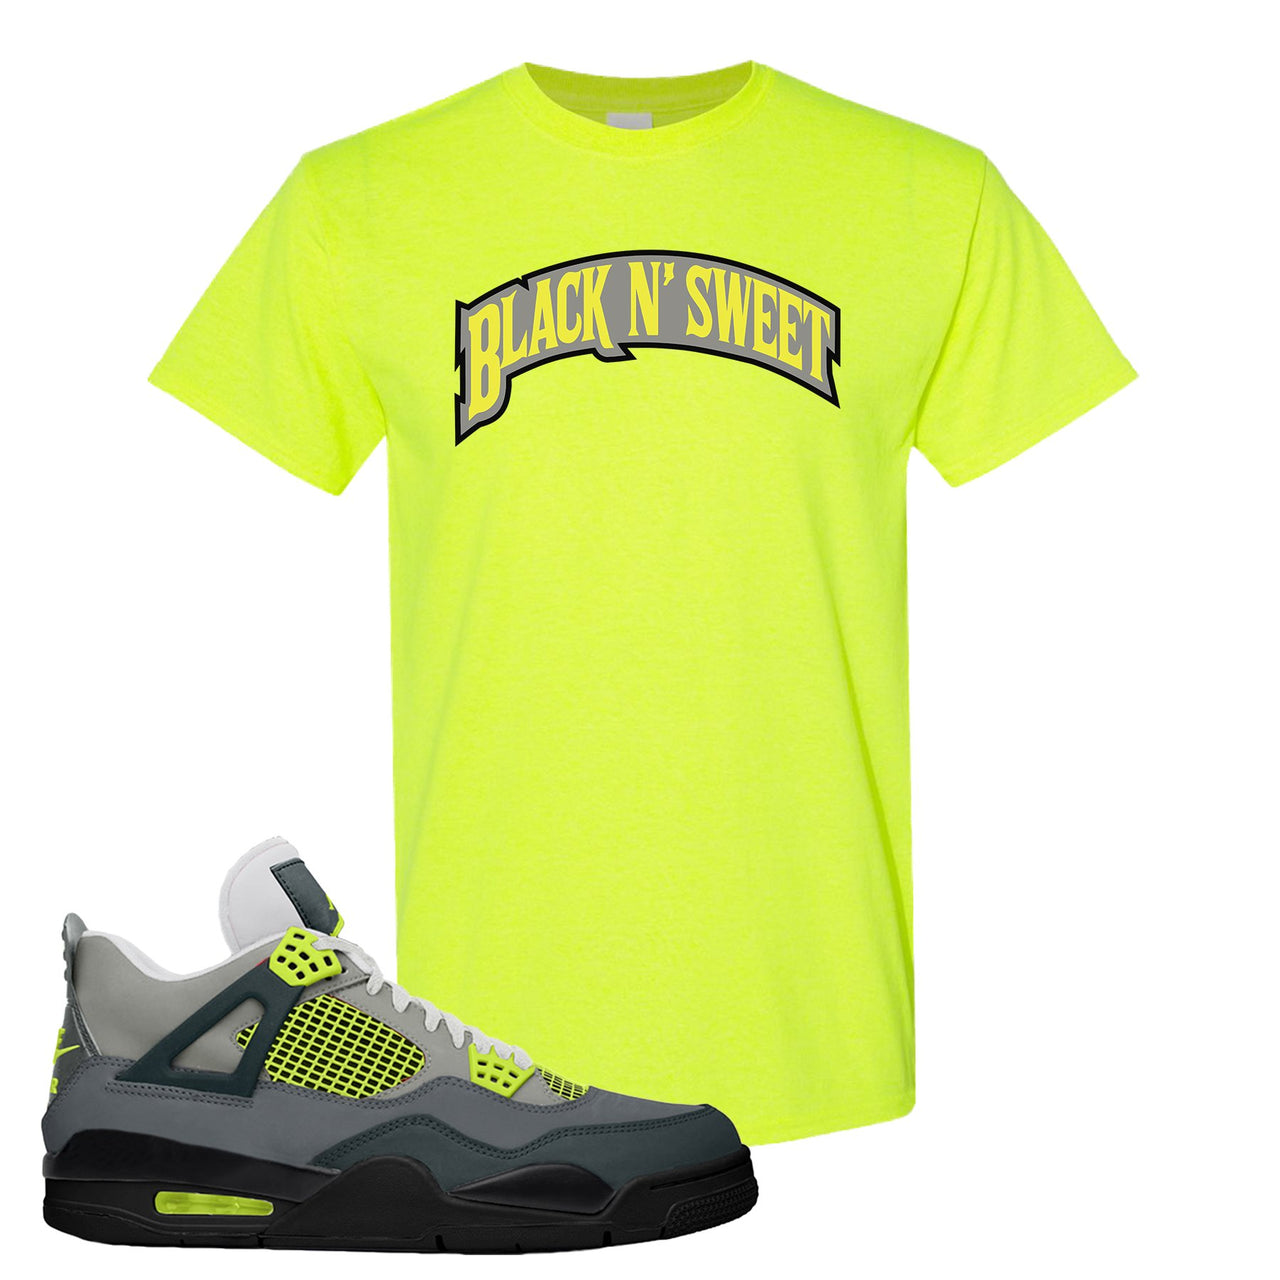 Jordan 4 Neon Sneaker Safety Green T Shirt | Tees to match Nike Air Jordan 4 Neon Shoes | Black N Sweet Arch